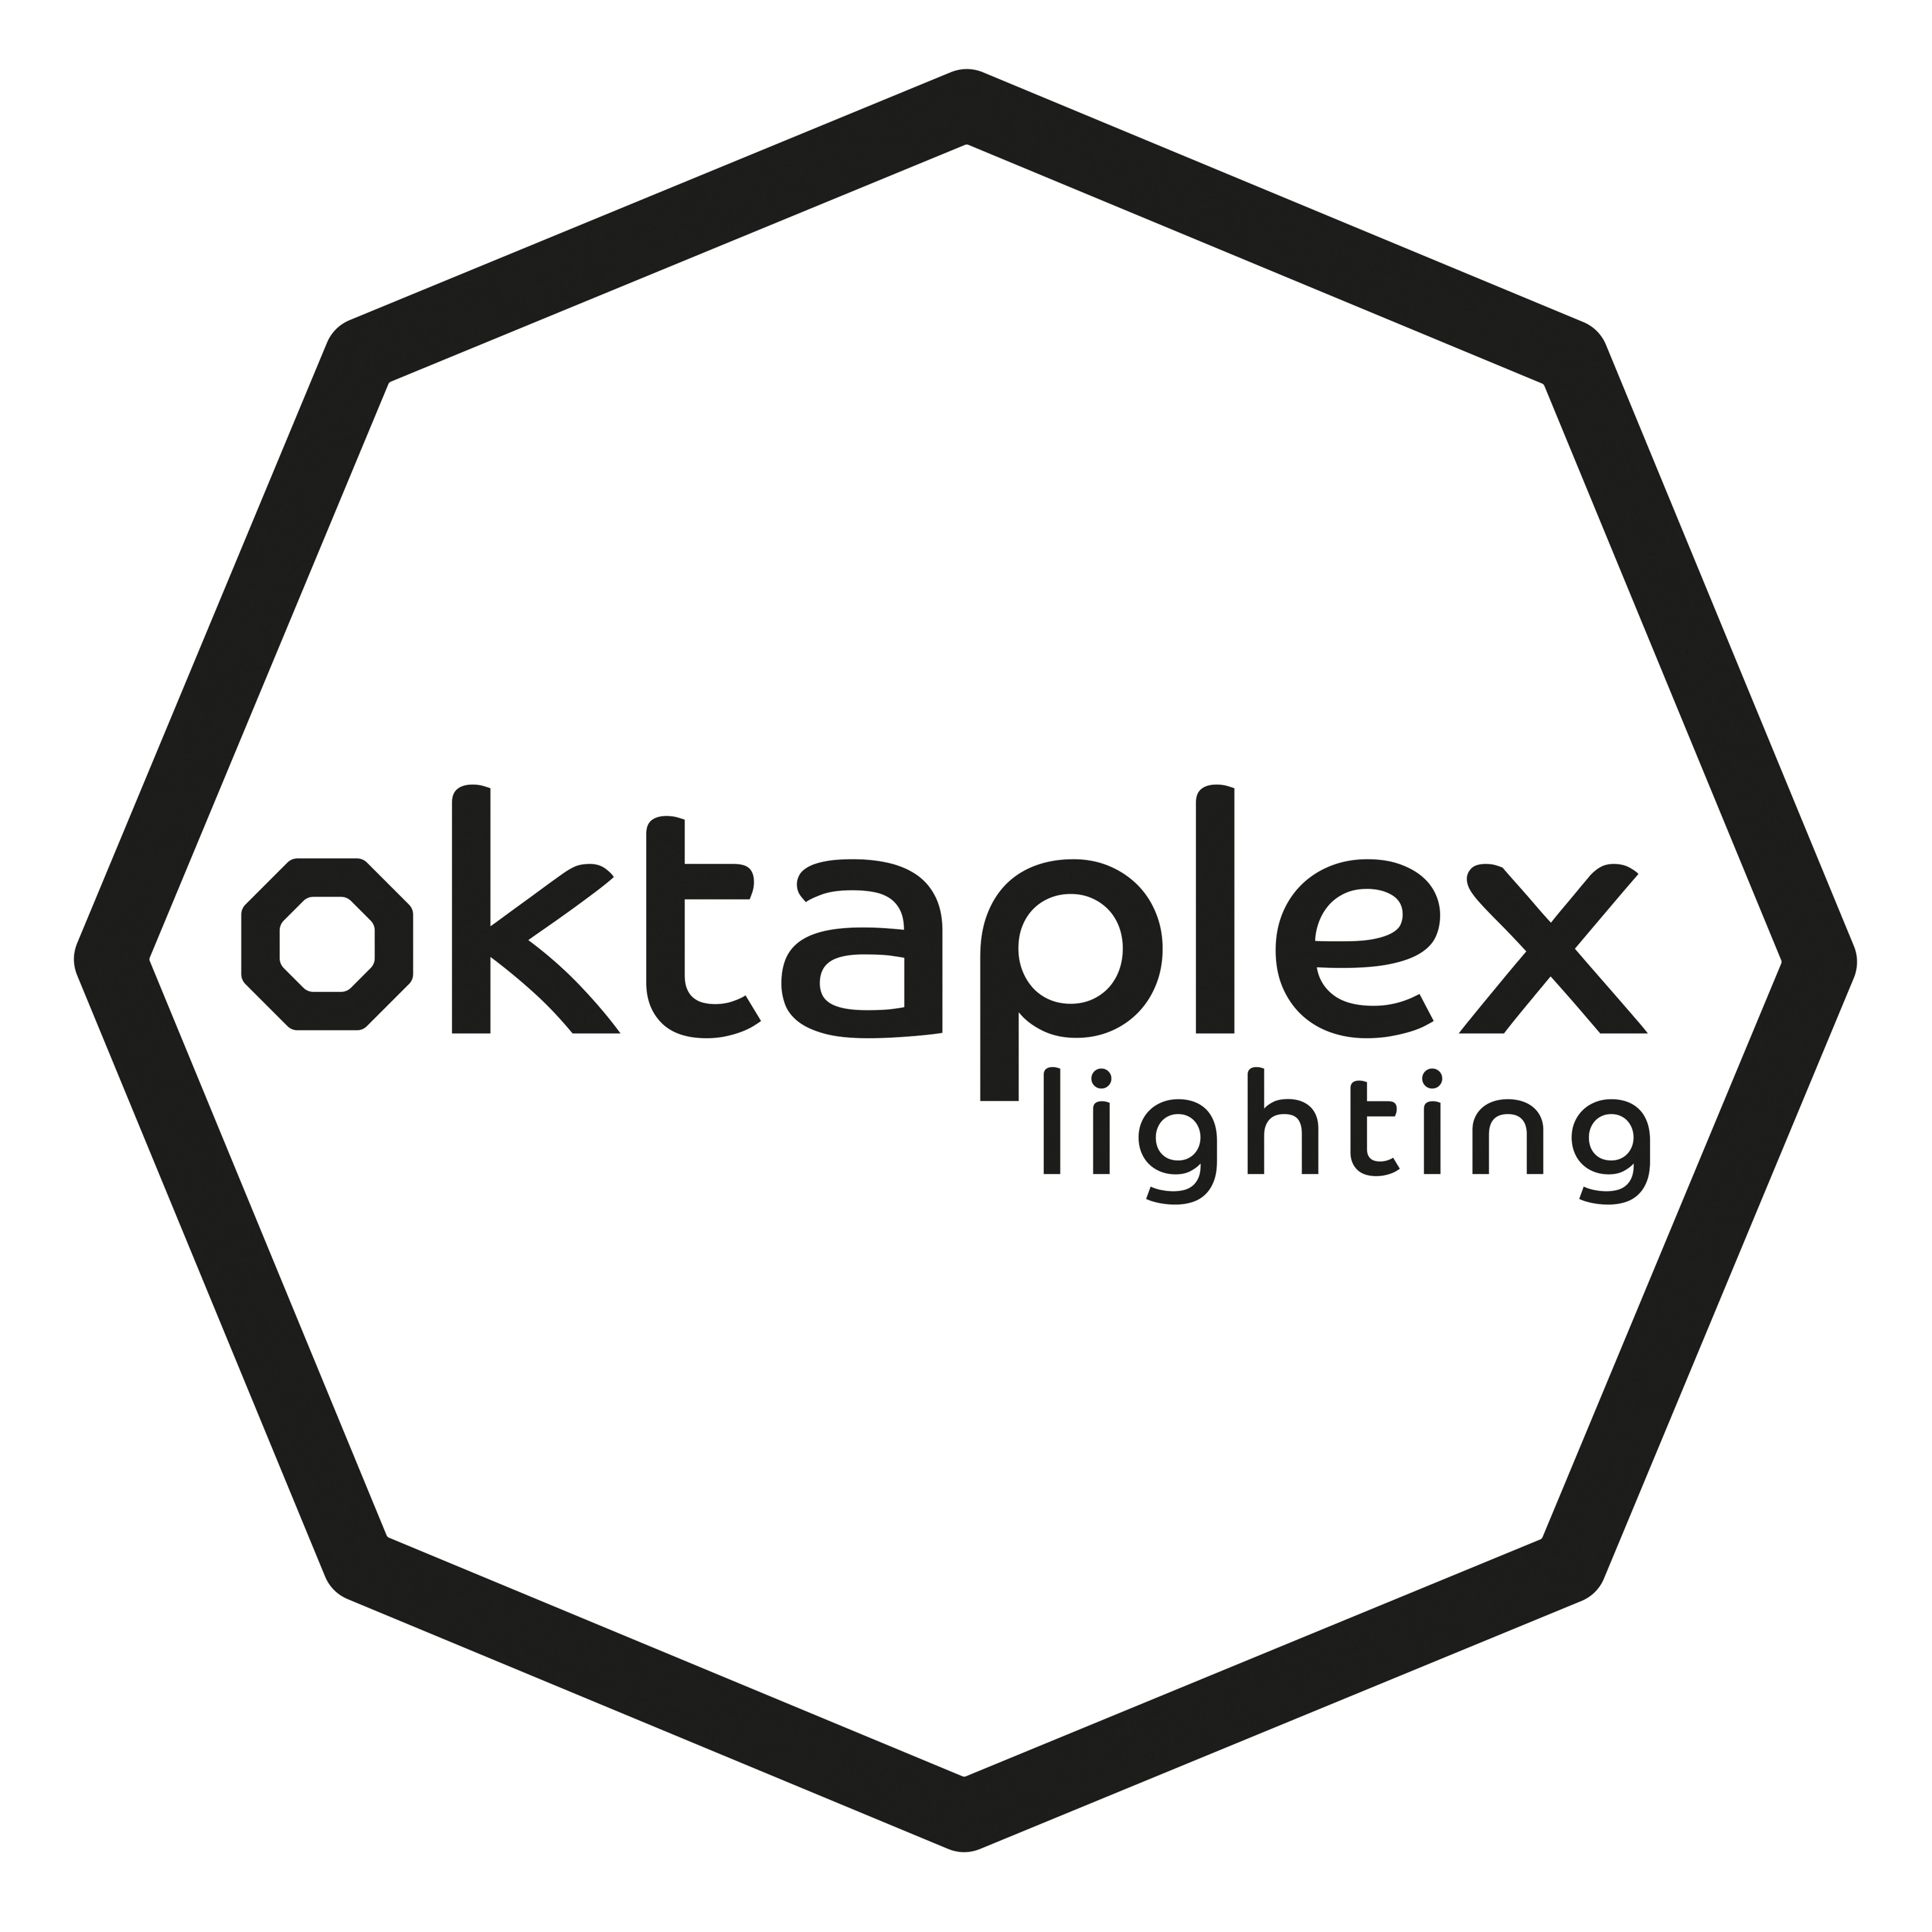 Oktaplex lighting